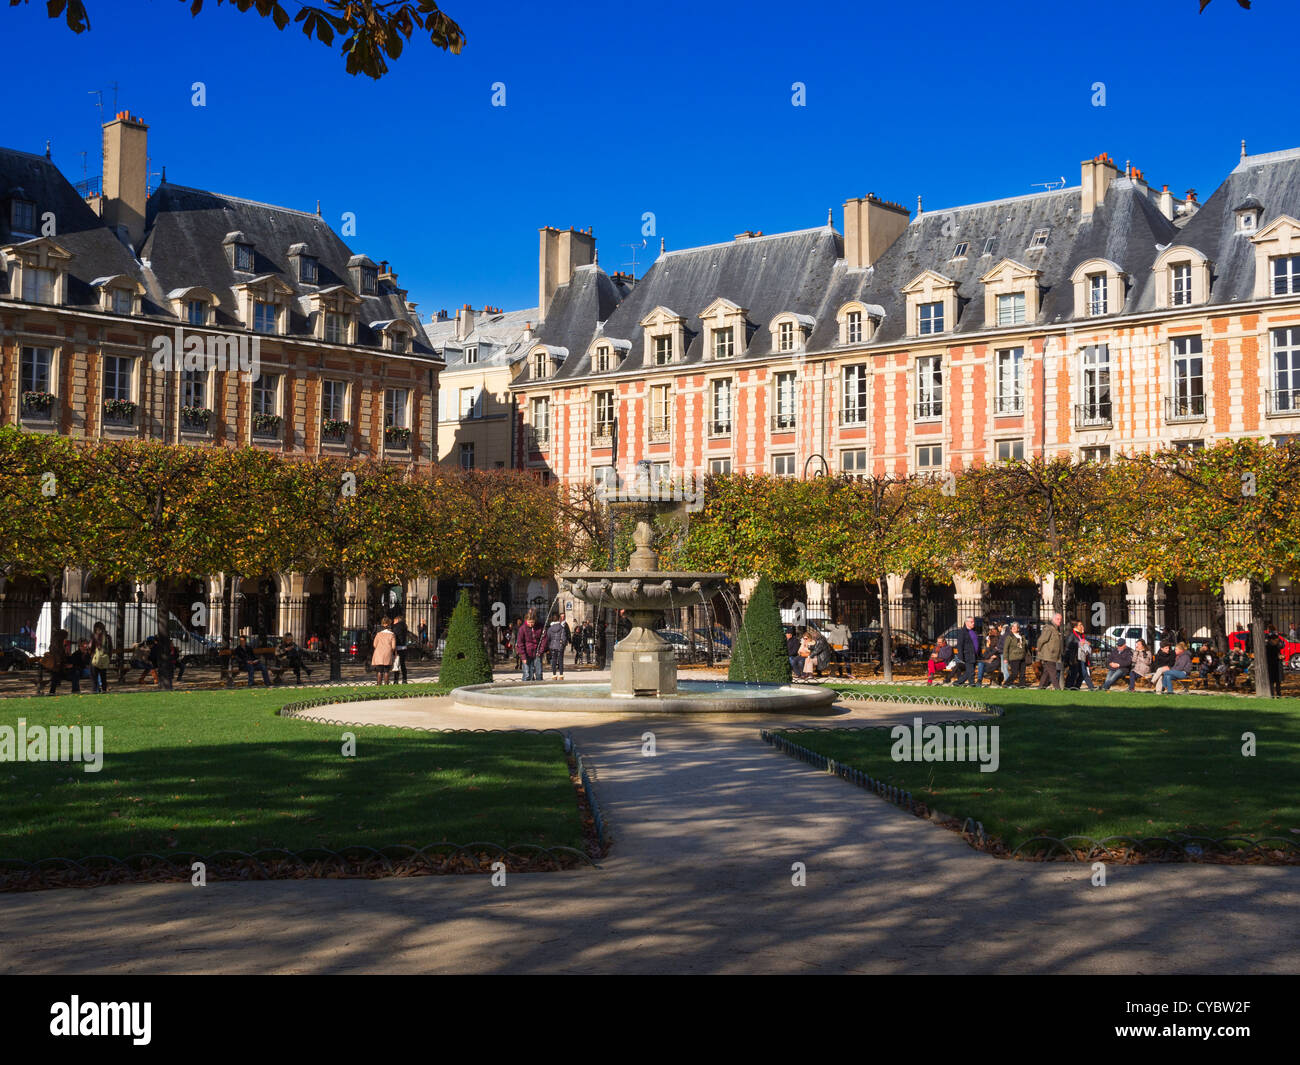 Place des Vosges, Paris. This is the oldest planned square in Paris, with uniform houses lining a large central park. Stock Photo